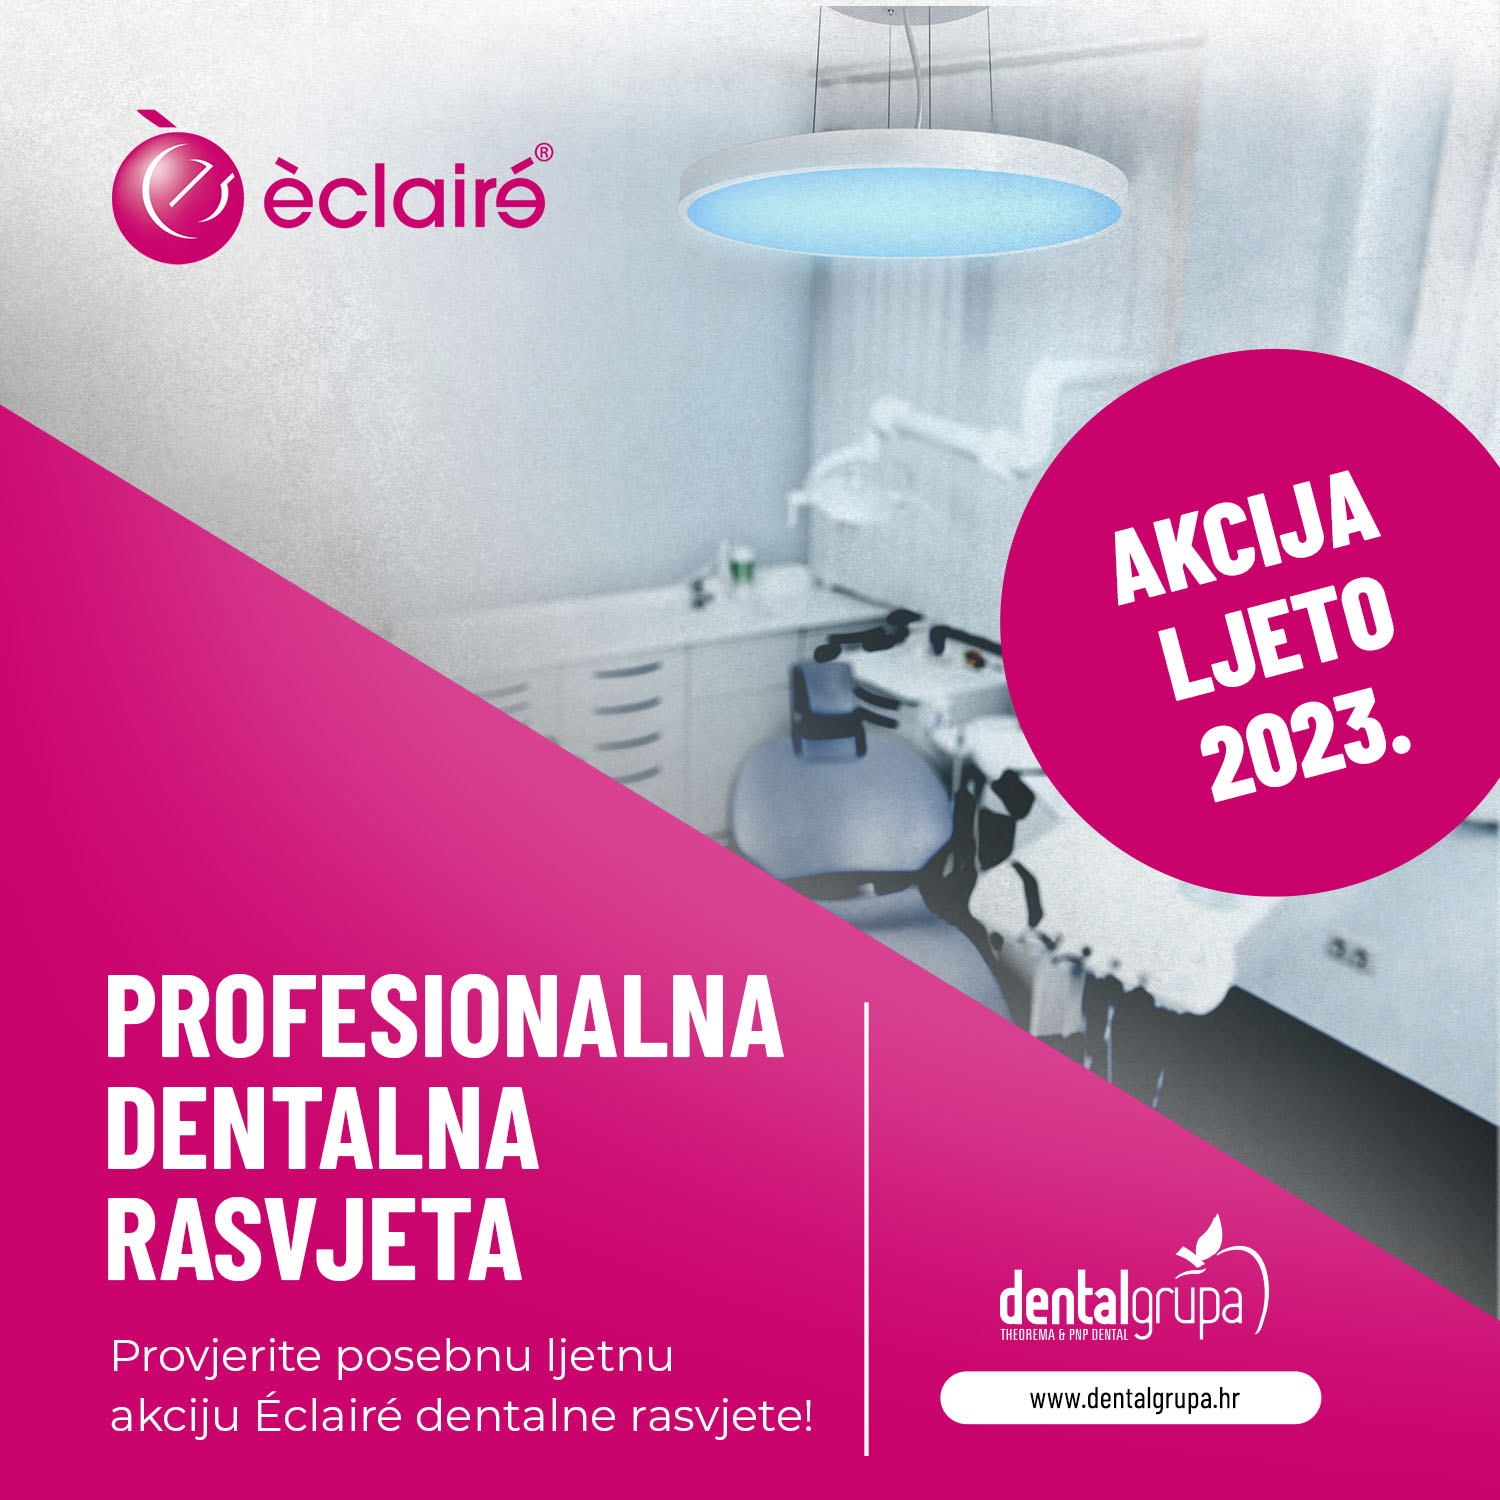 ÈCLAIRÉ - profesionalna dentalna rasvjeta - AKCIJA